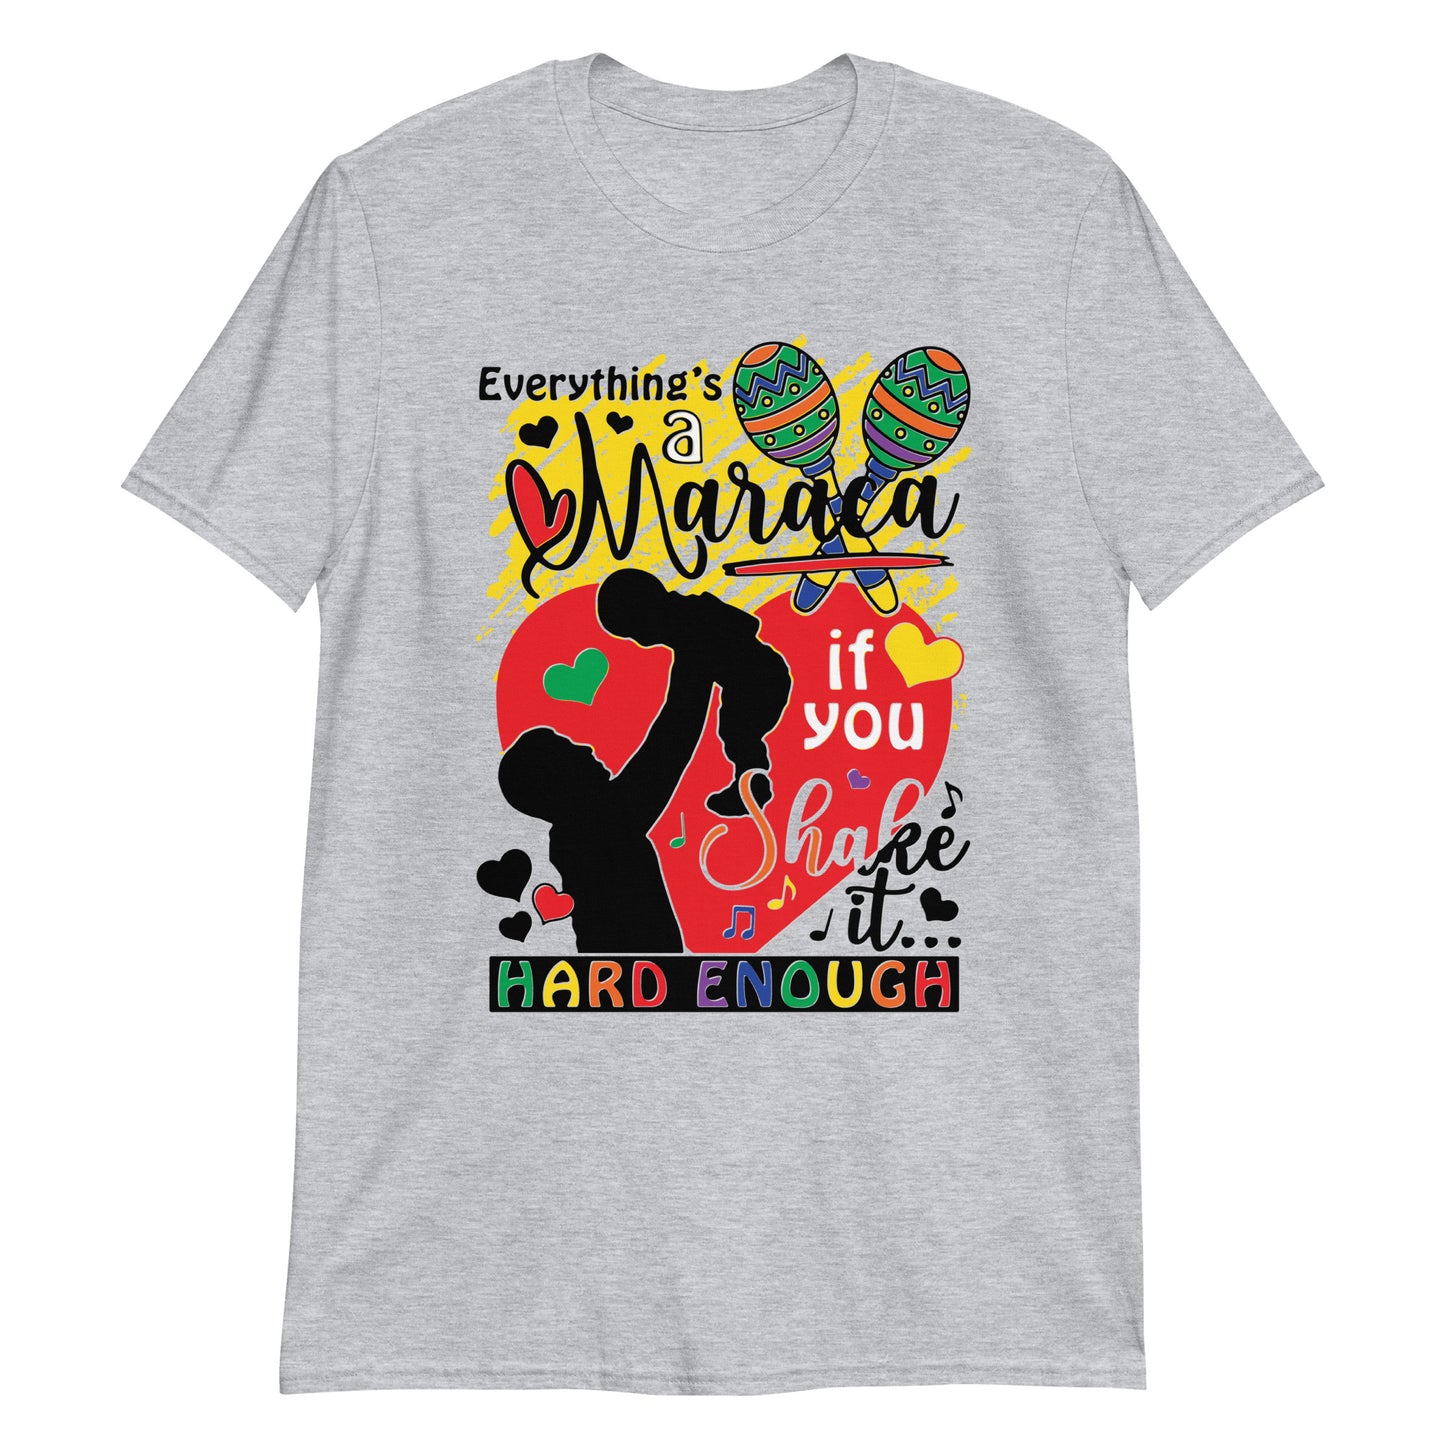 Everythings a maraca if you shake it hard enough.